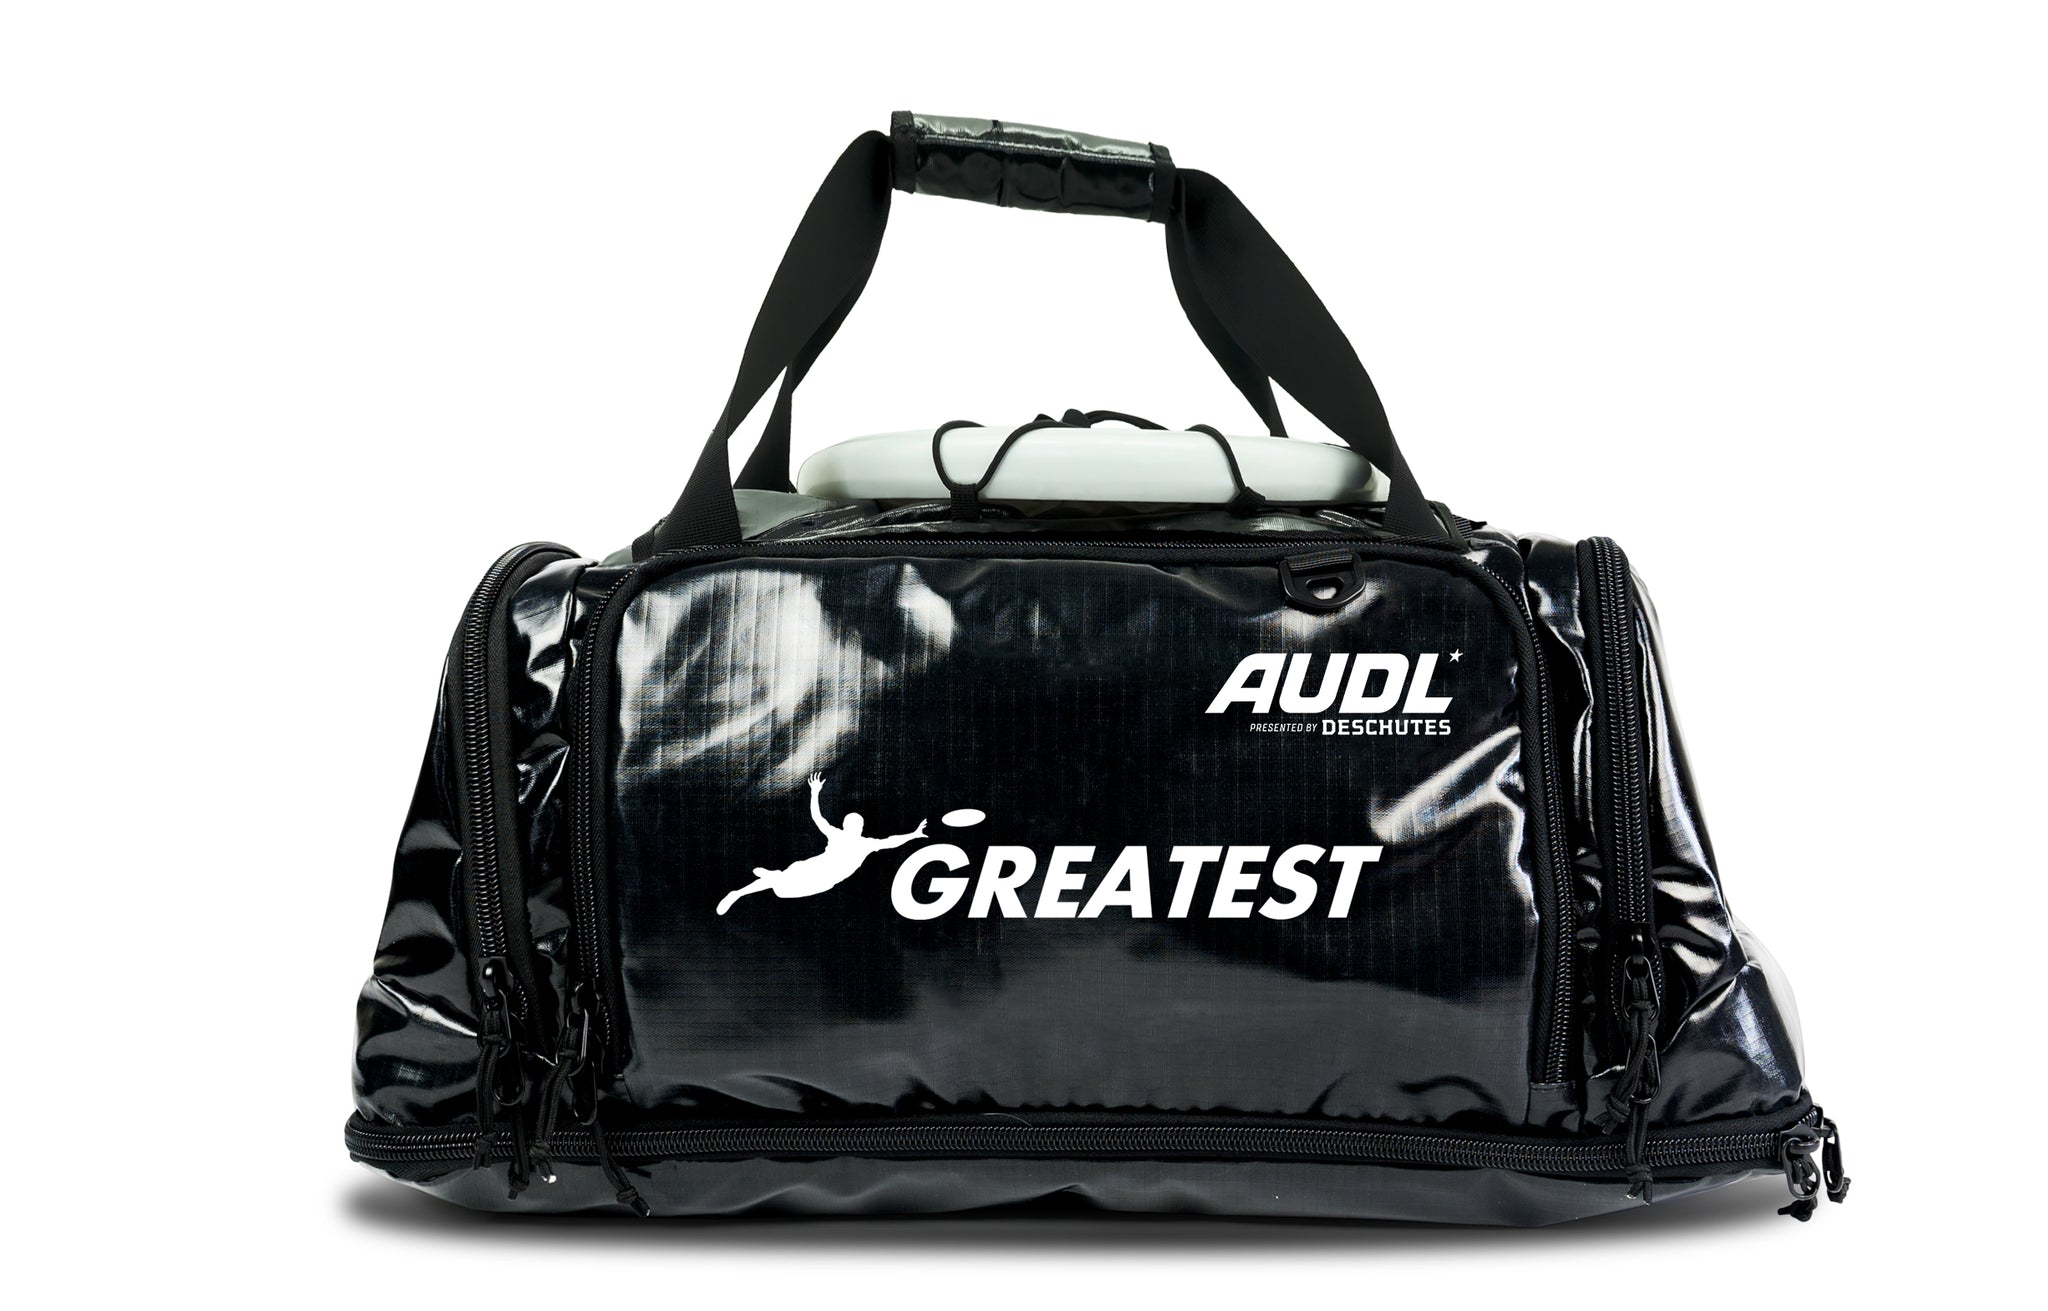 60L Greatest Ultimate Bag